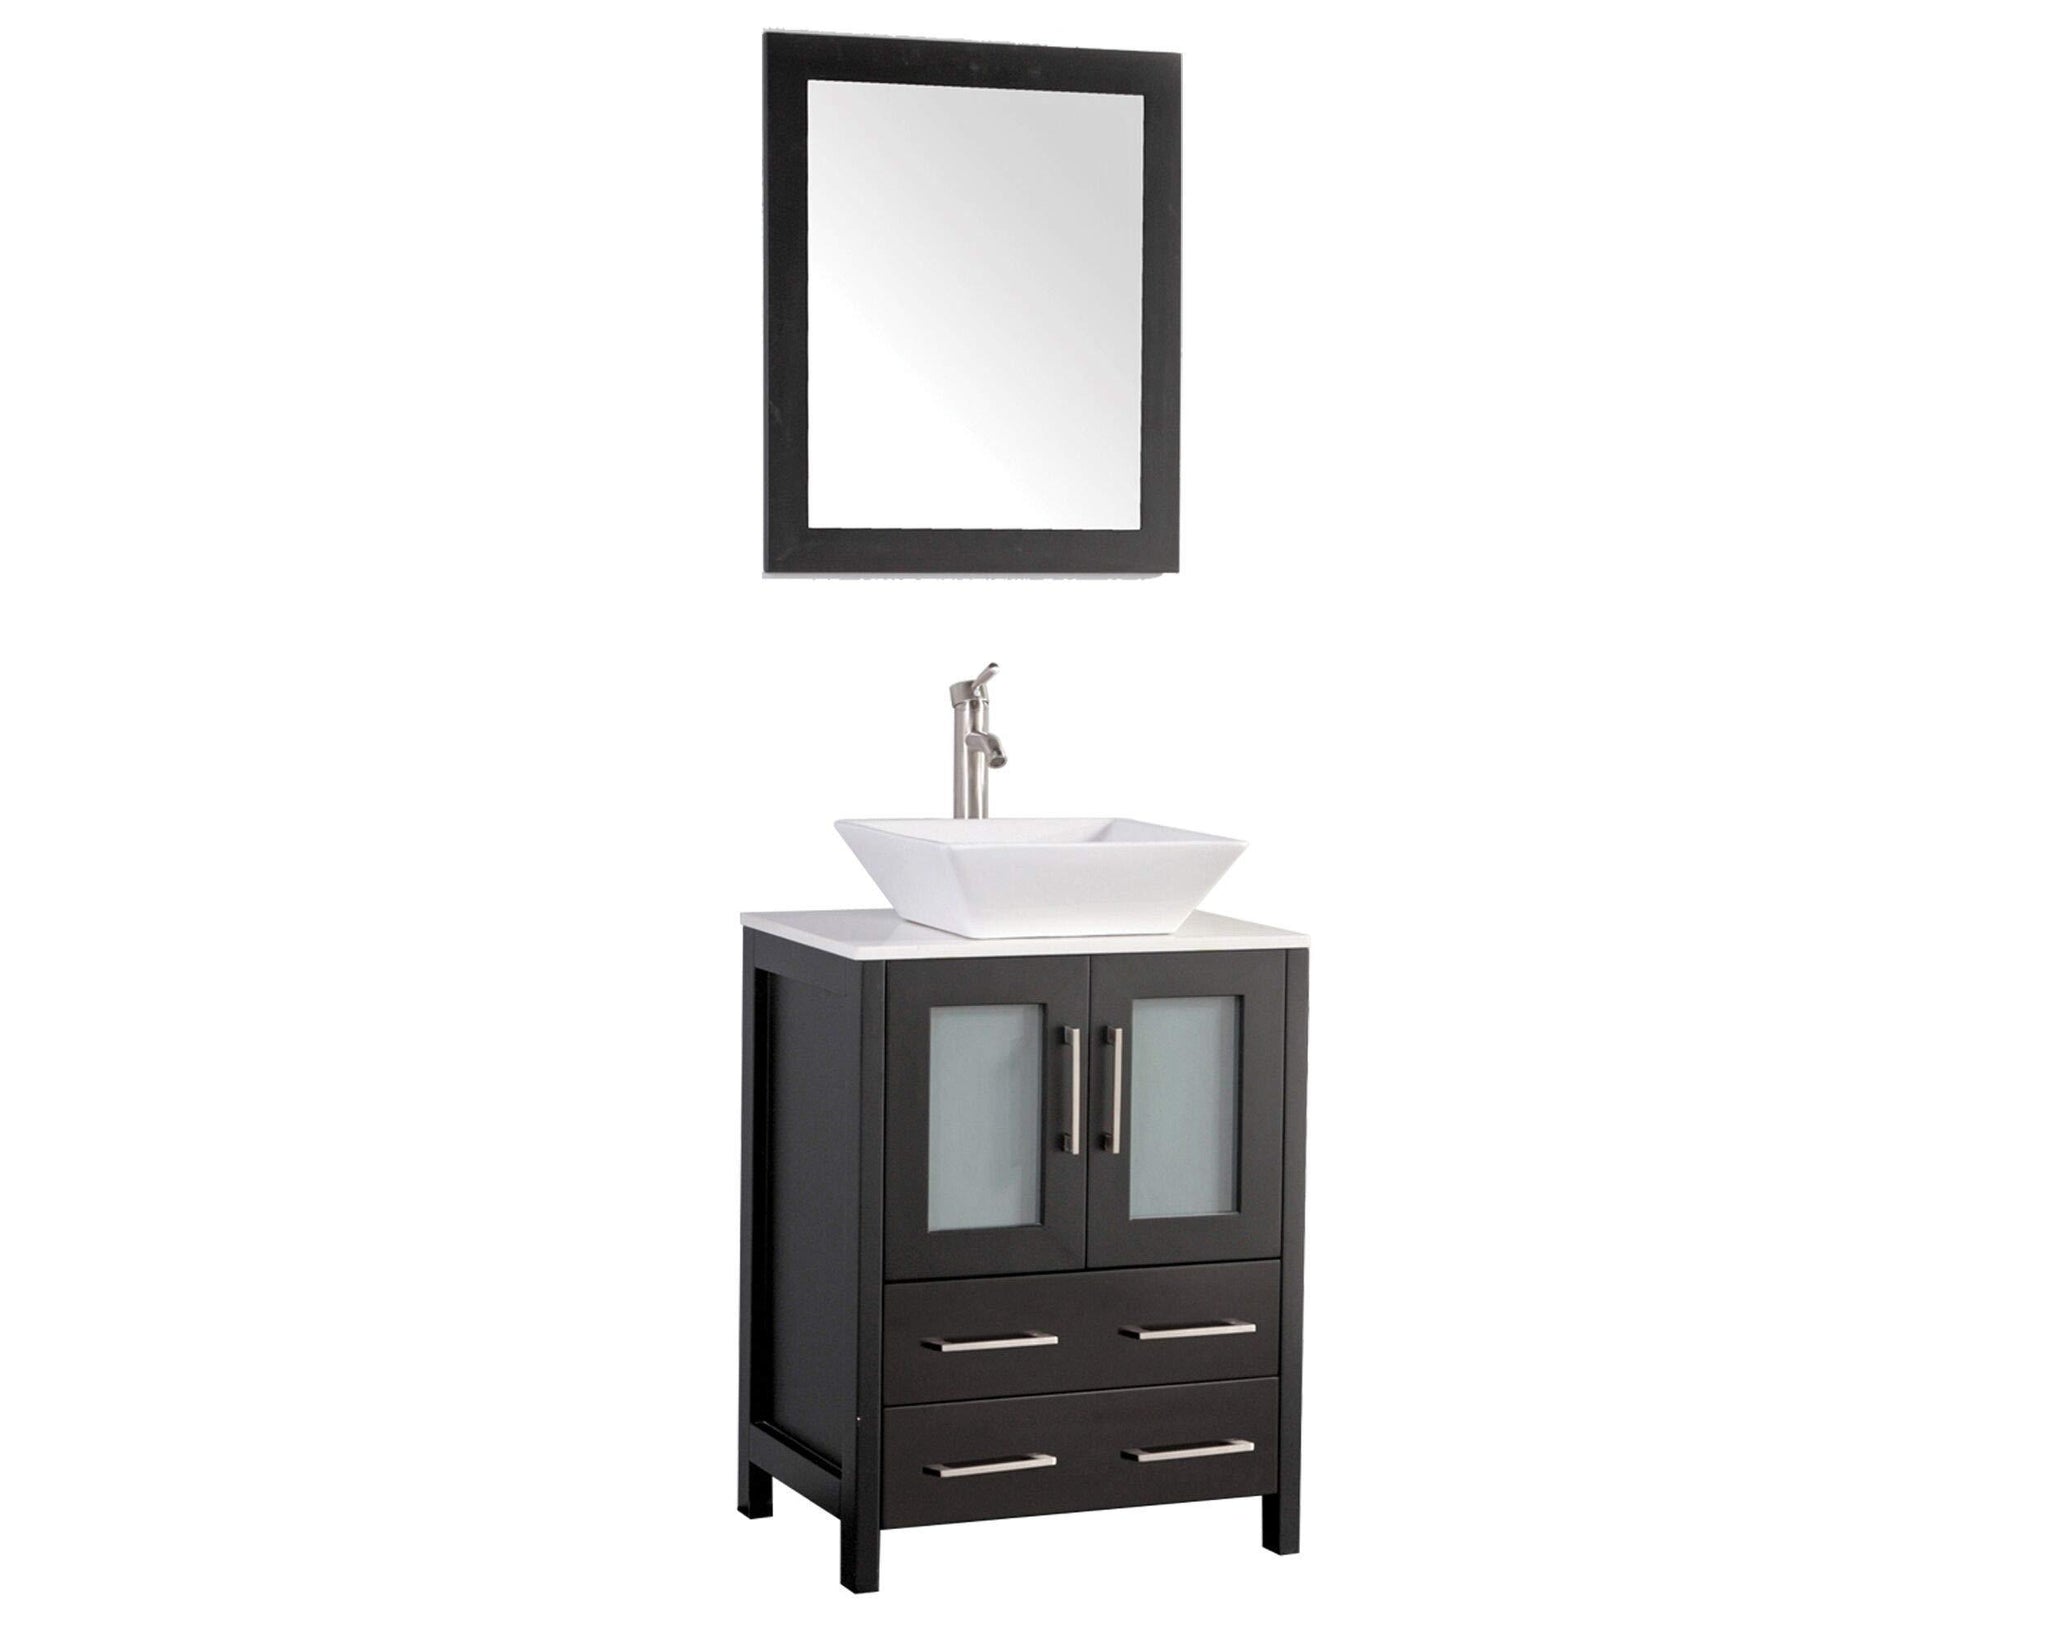 Try vanity art 24 inch modern bathroom vanity set cabinet single sink combo with ceramic top free mirror 2 door 2 drawer storage espresso va3124e